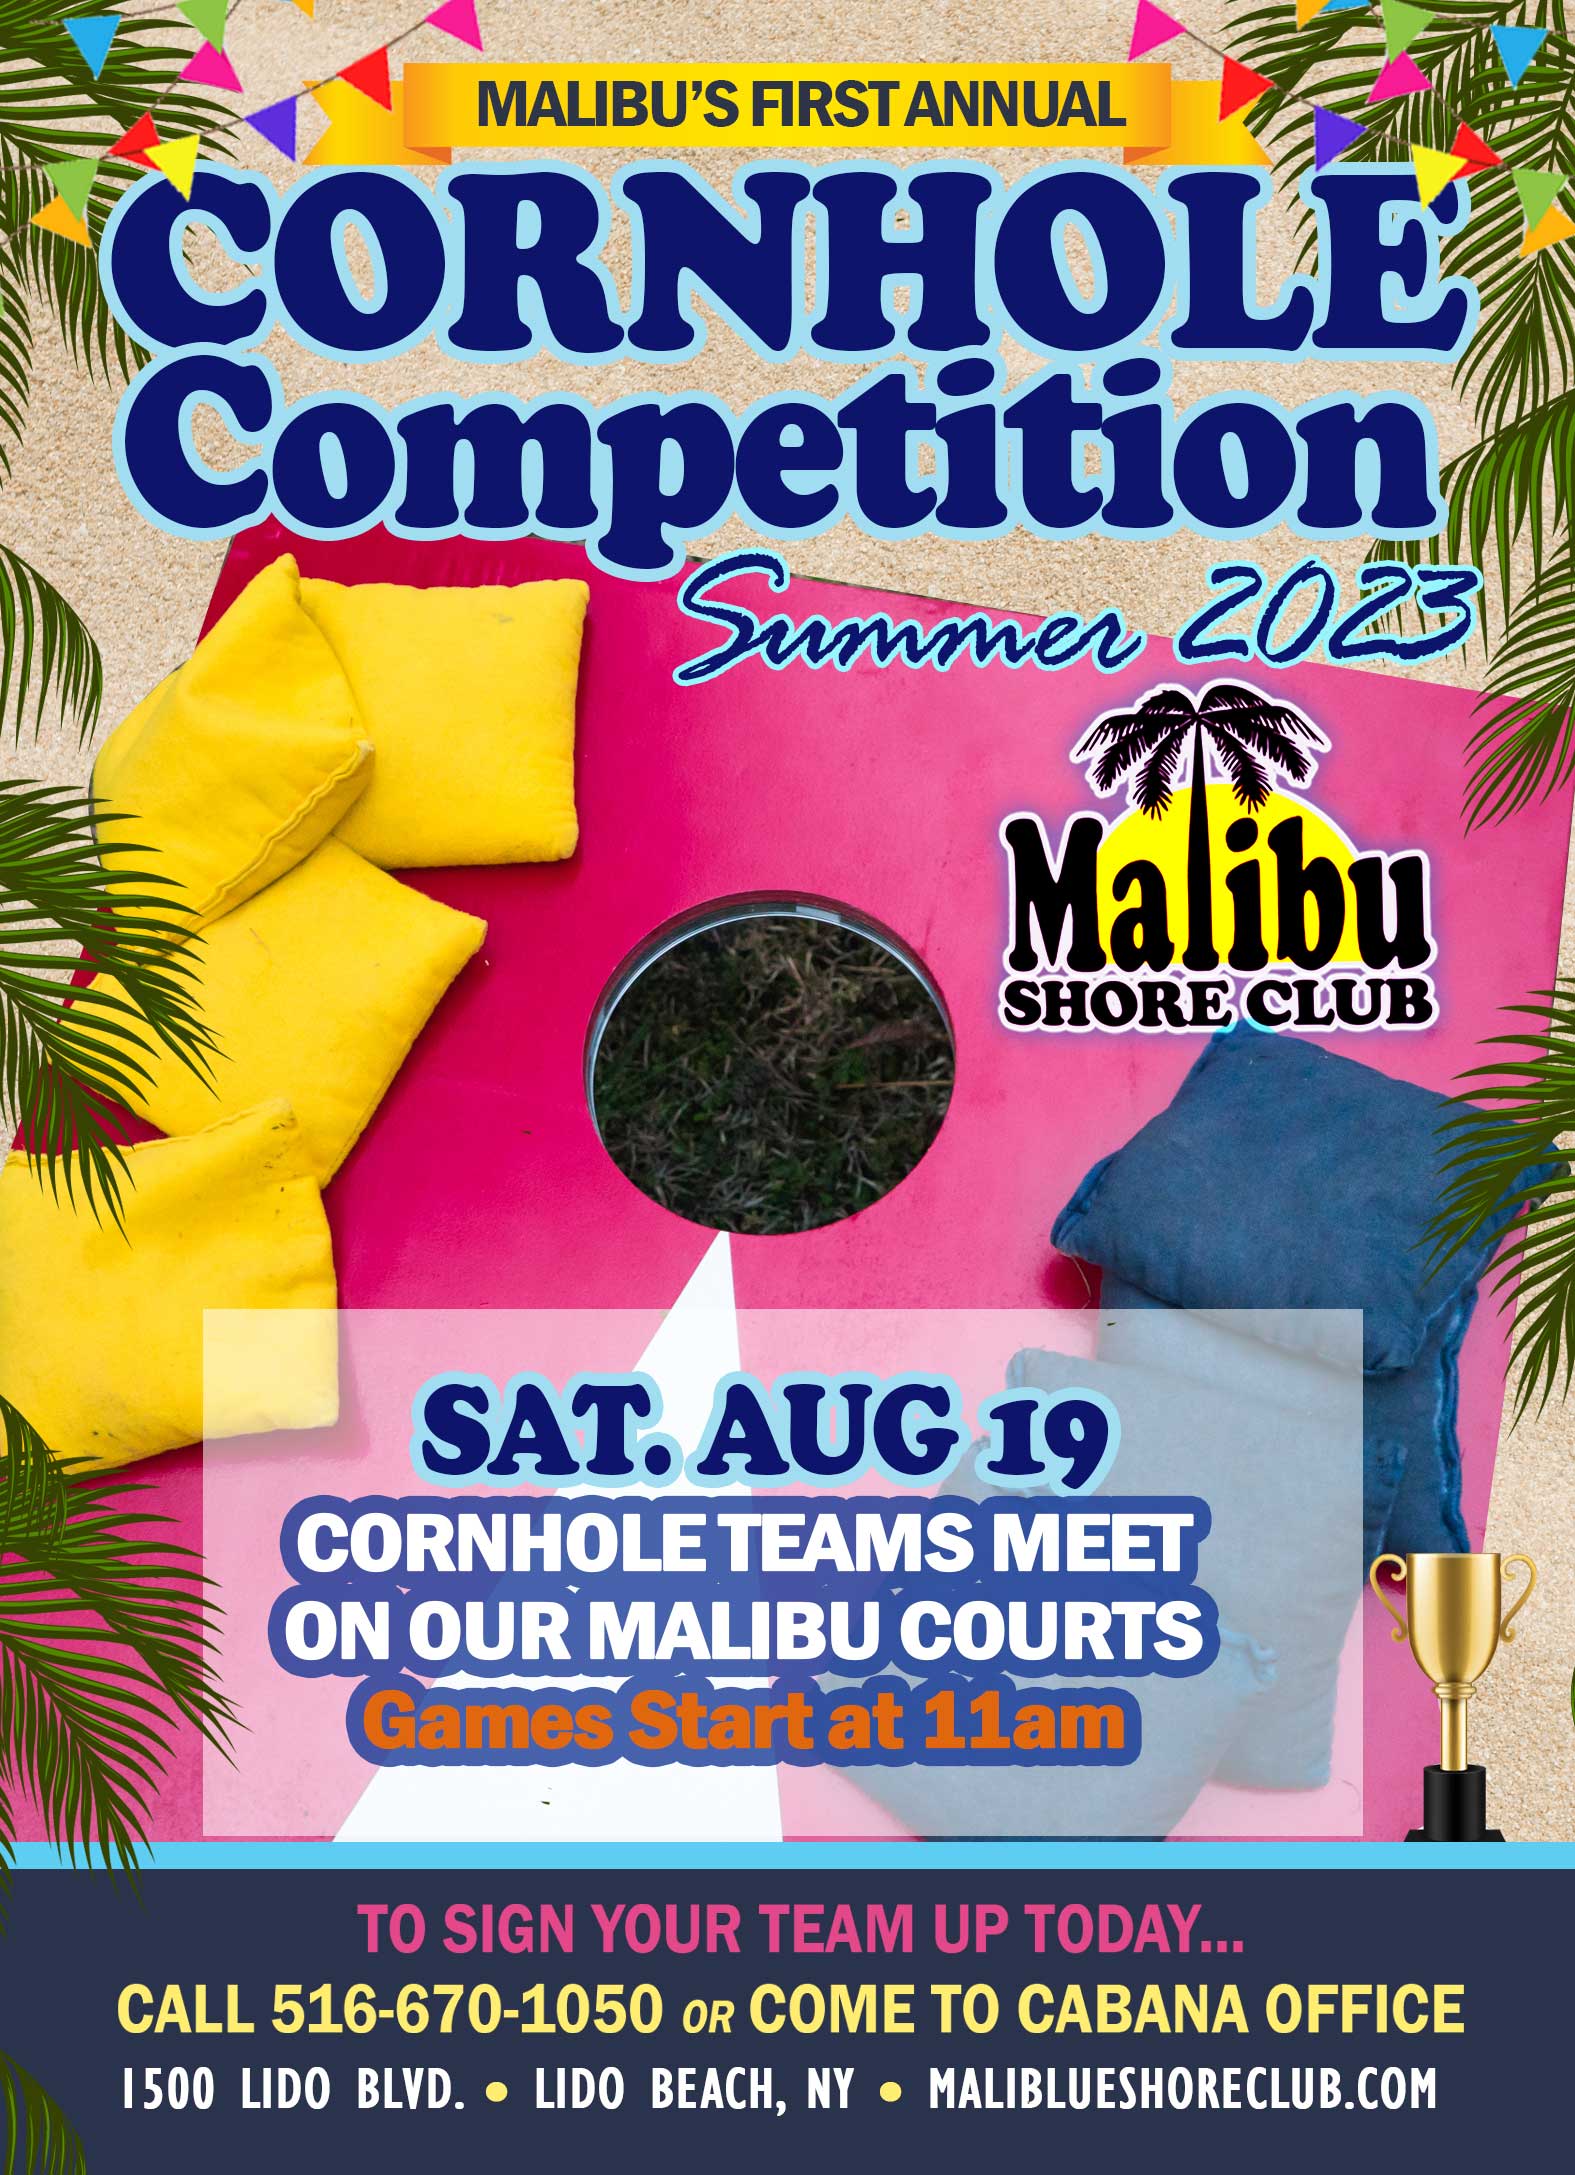 Malibu Shore Club Cornhole Competition